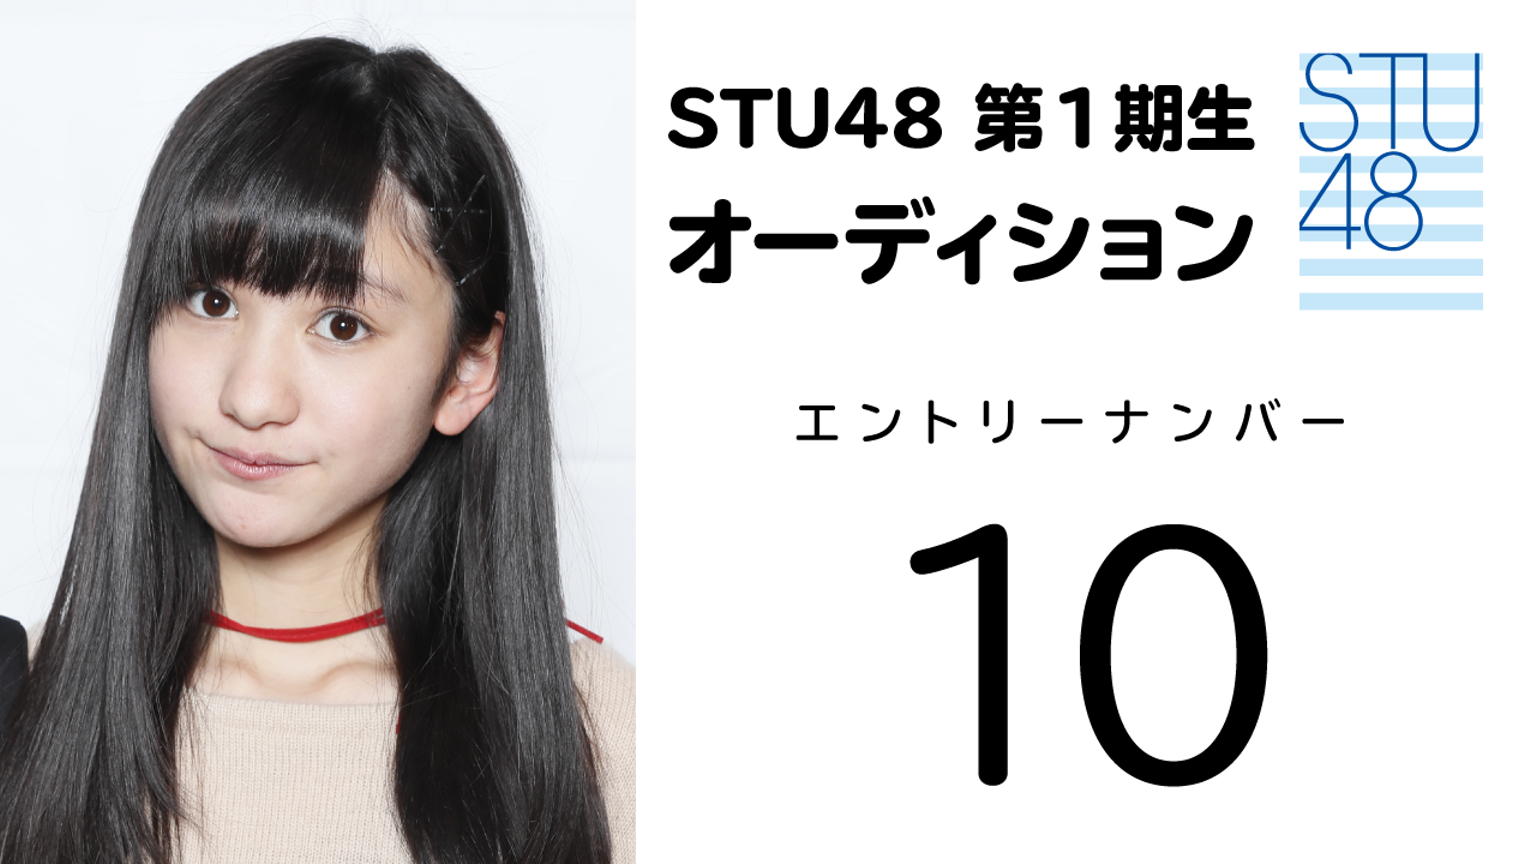 STU48 第1期受験生 エントリーナンバー10番